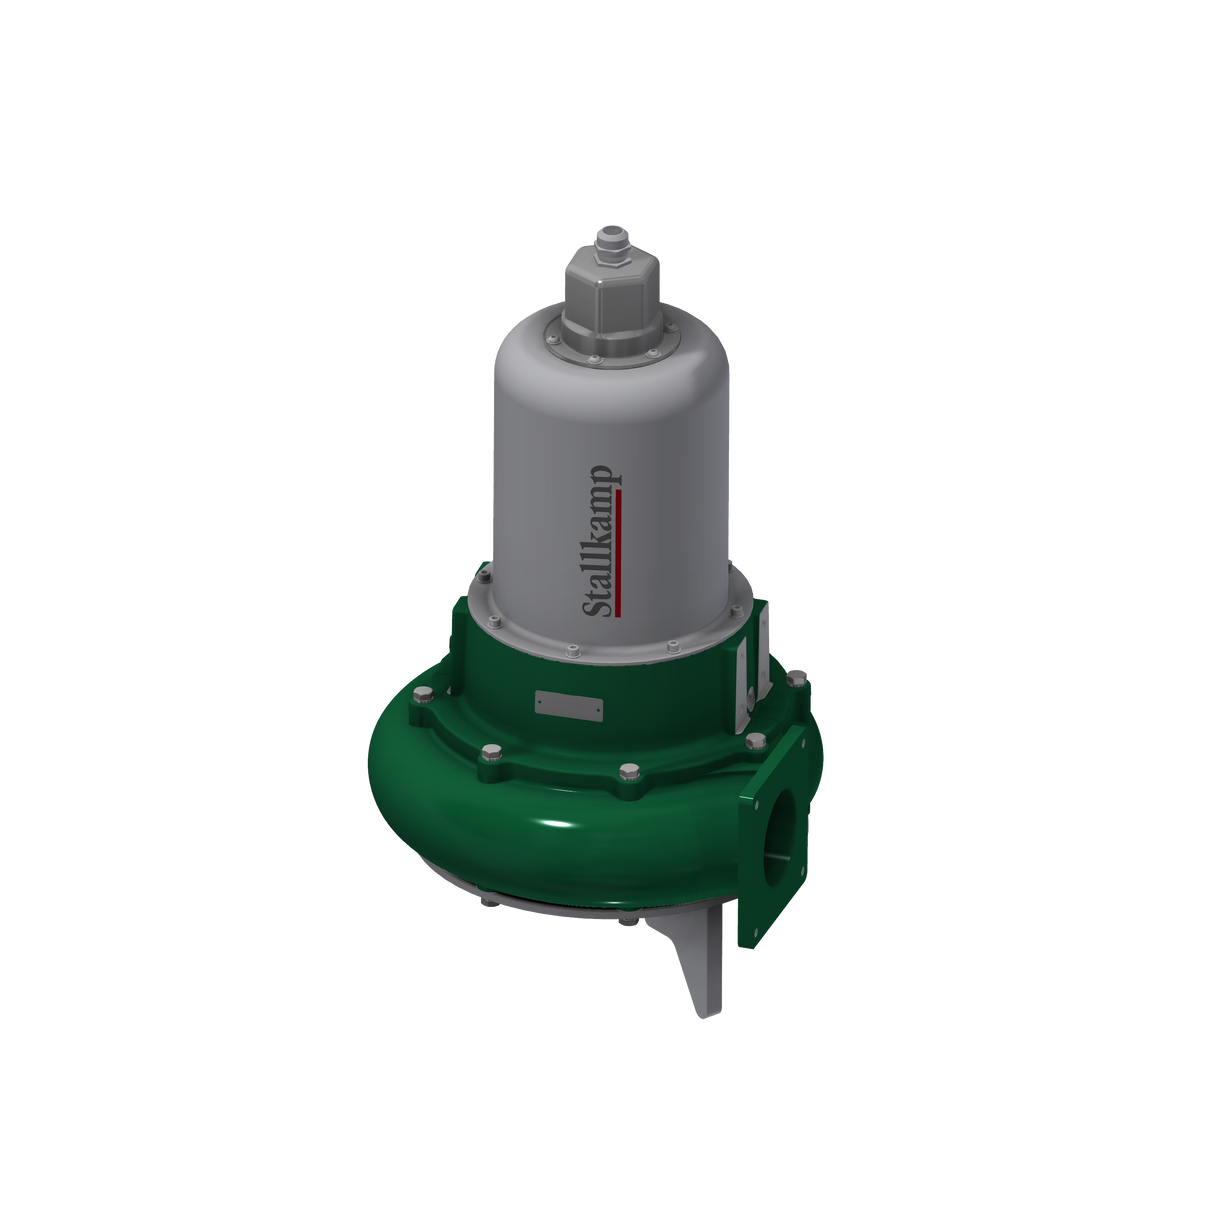 Submersible motor pump